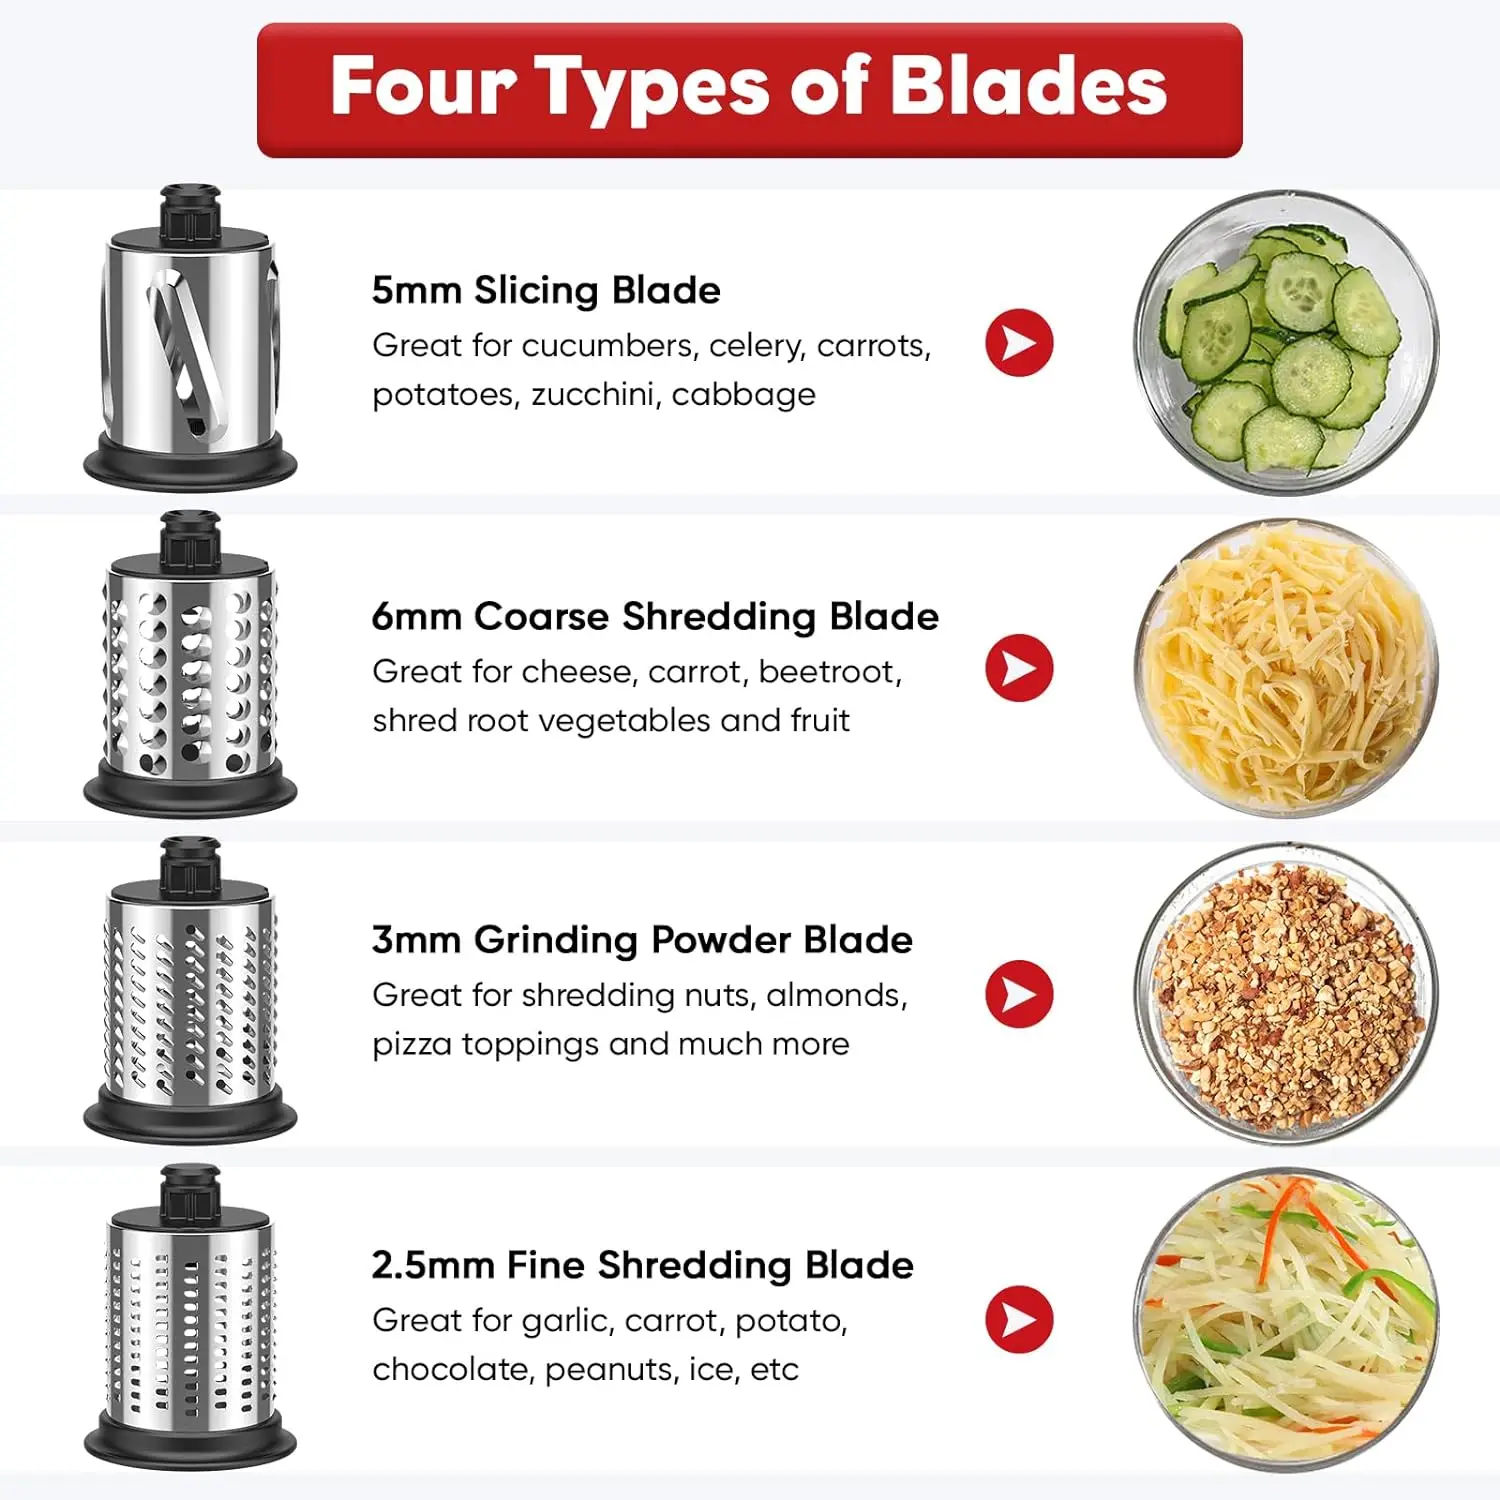 Dishwasher Safe,Stainless Steel Slicer/Shredder Attachment for KitchenAid Stand Mixer, Salad Machine Vegetable Slicer Maker